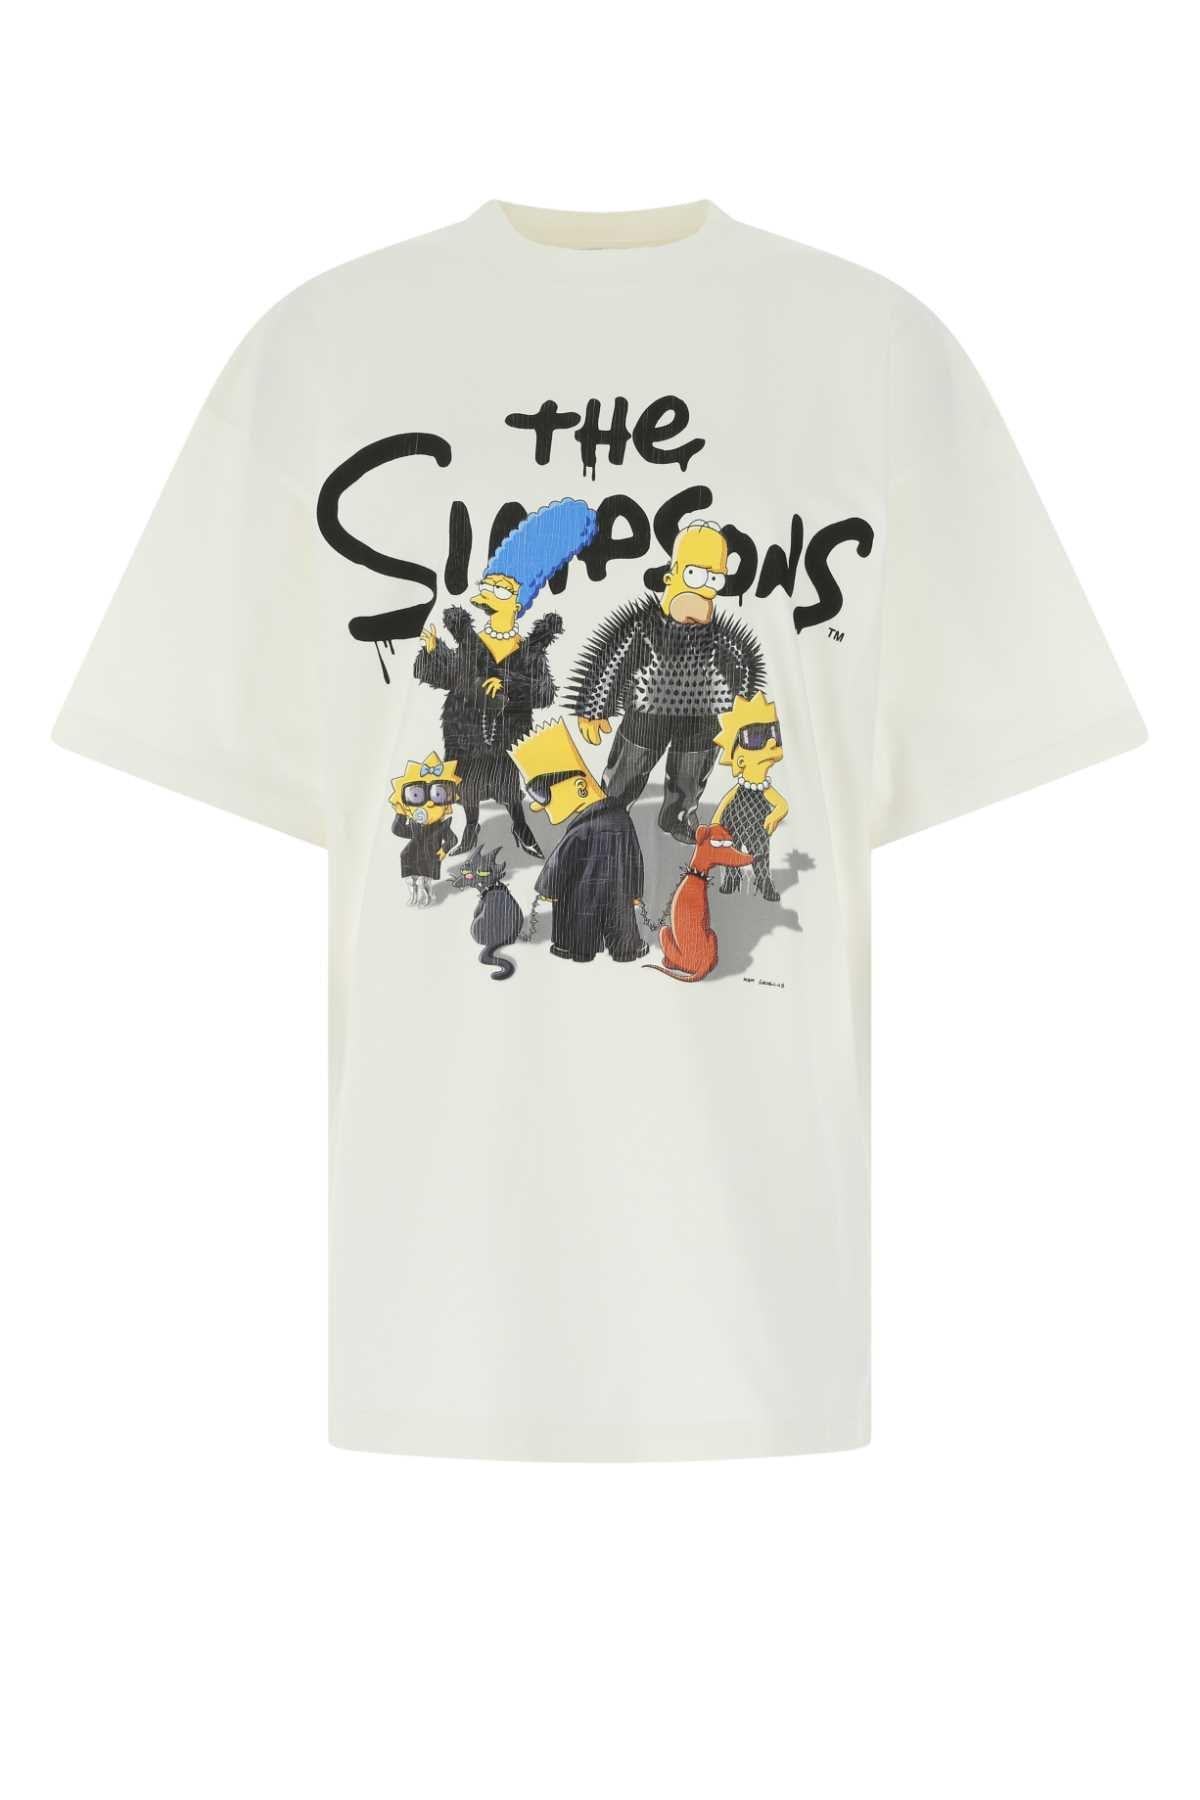 Balenciaga X The Simpsons Graphic Printed T-shirt